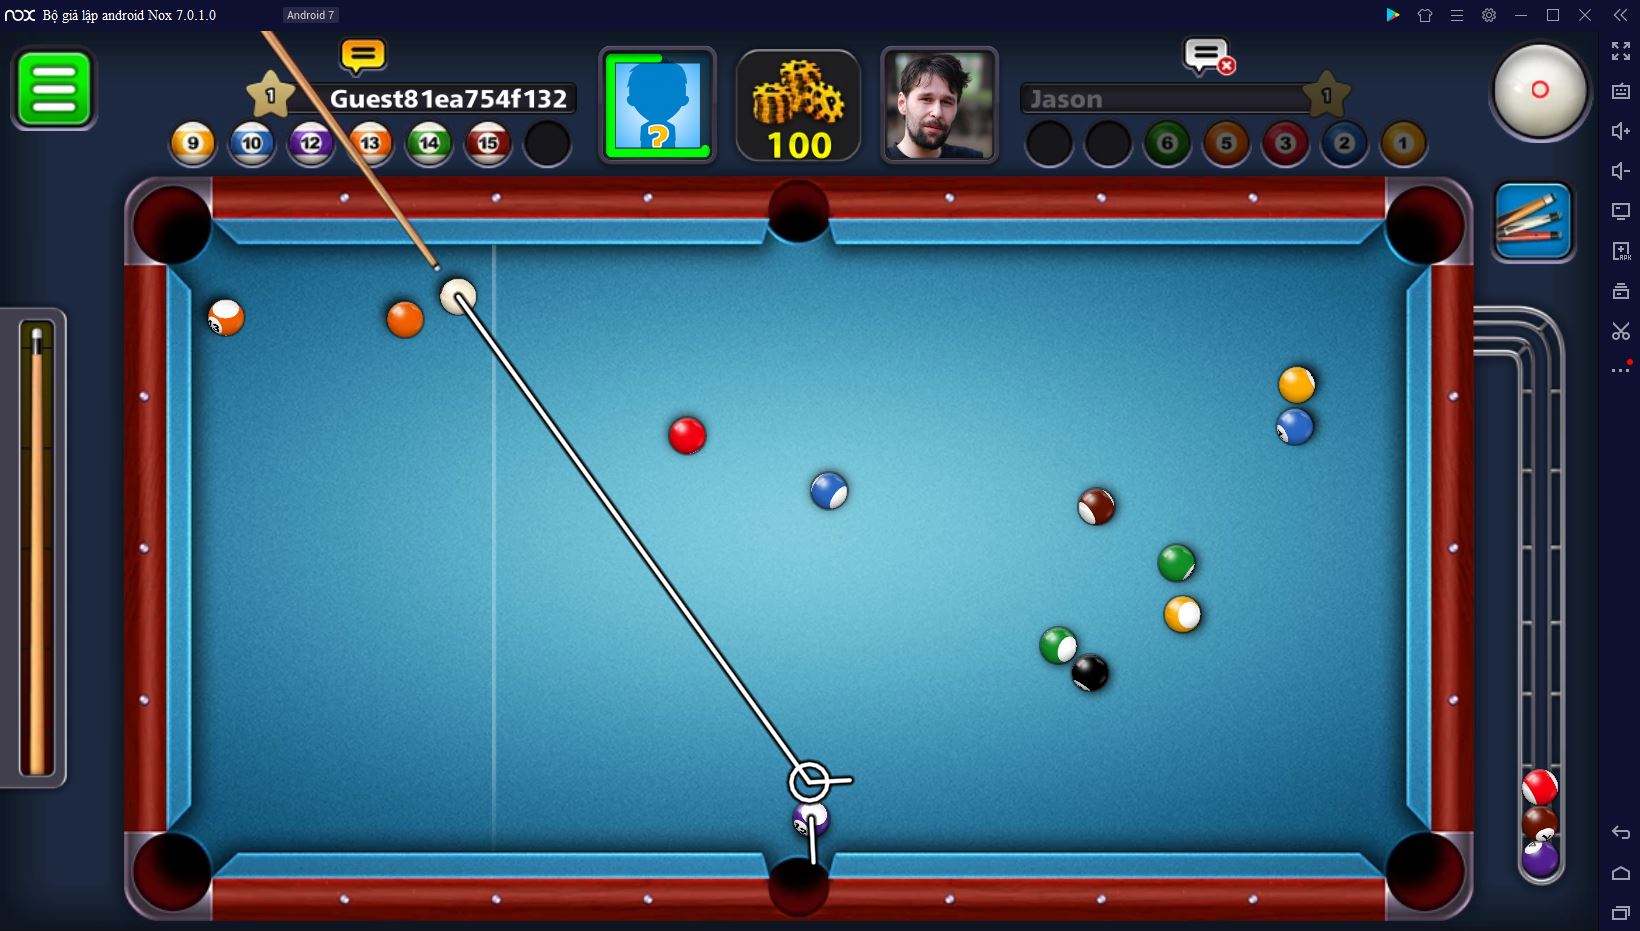 8 ball pool apk latest version 3.13.1 download